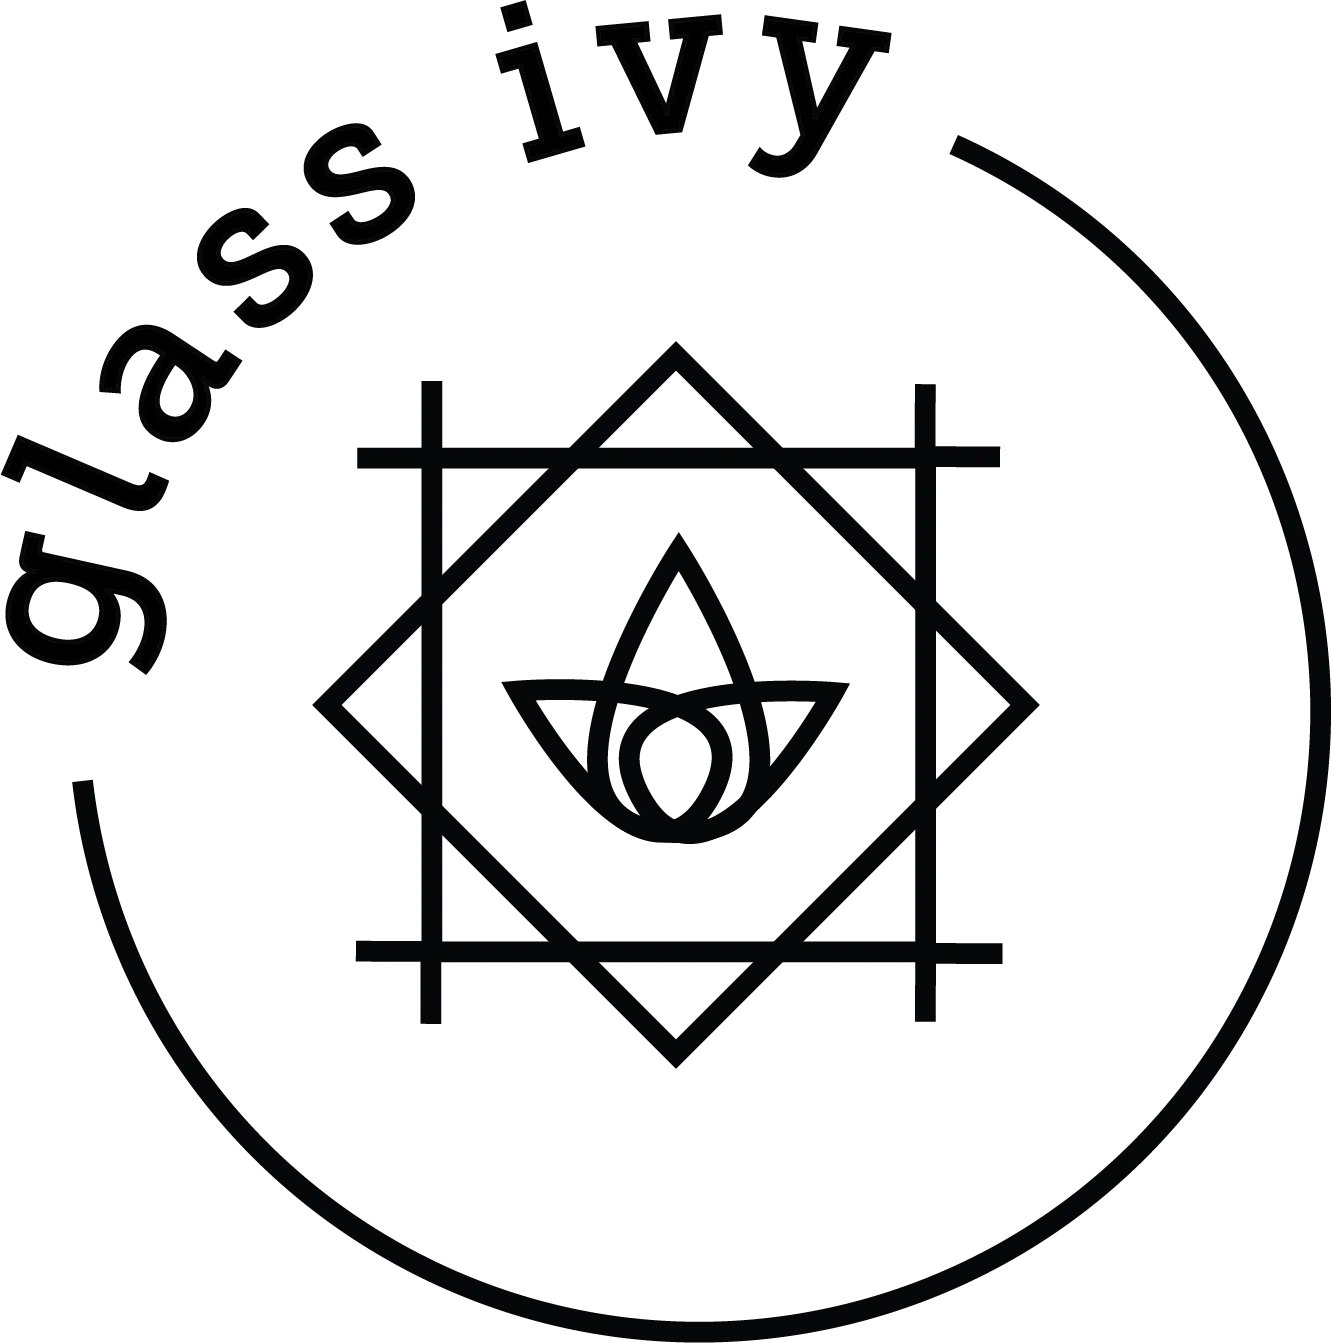 brand awareness glass ivy